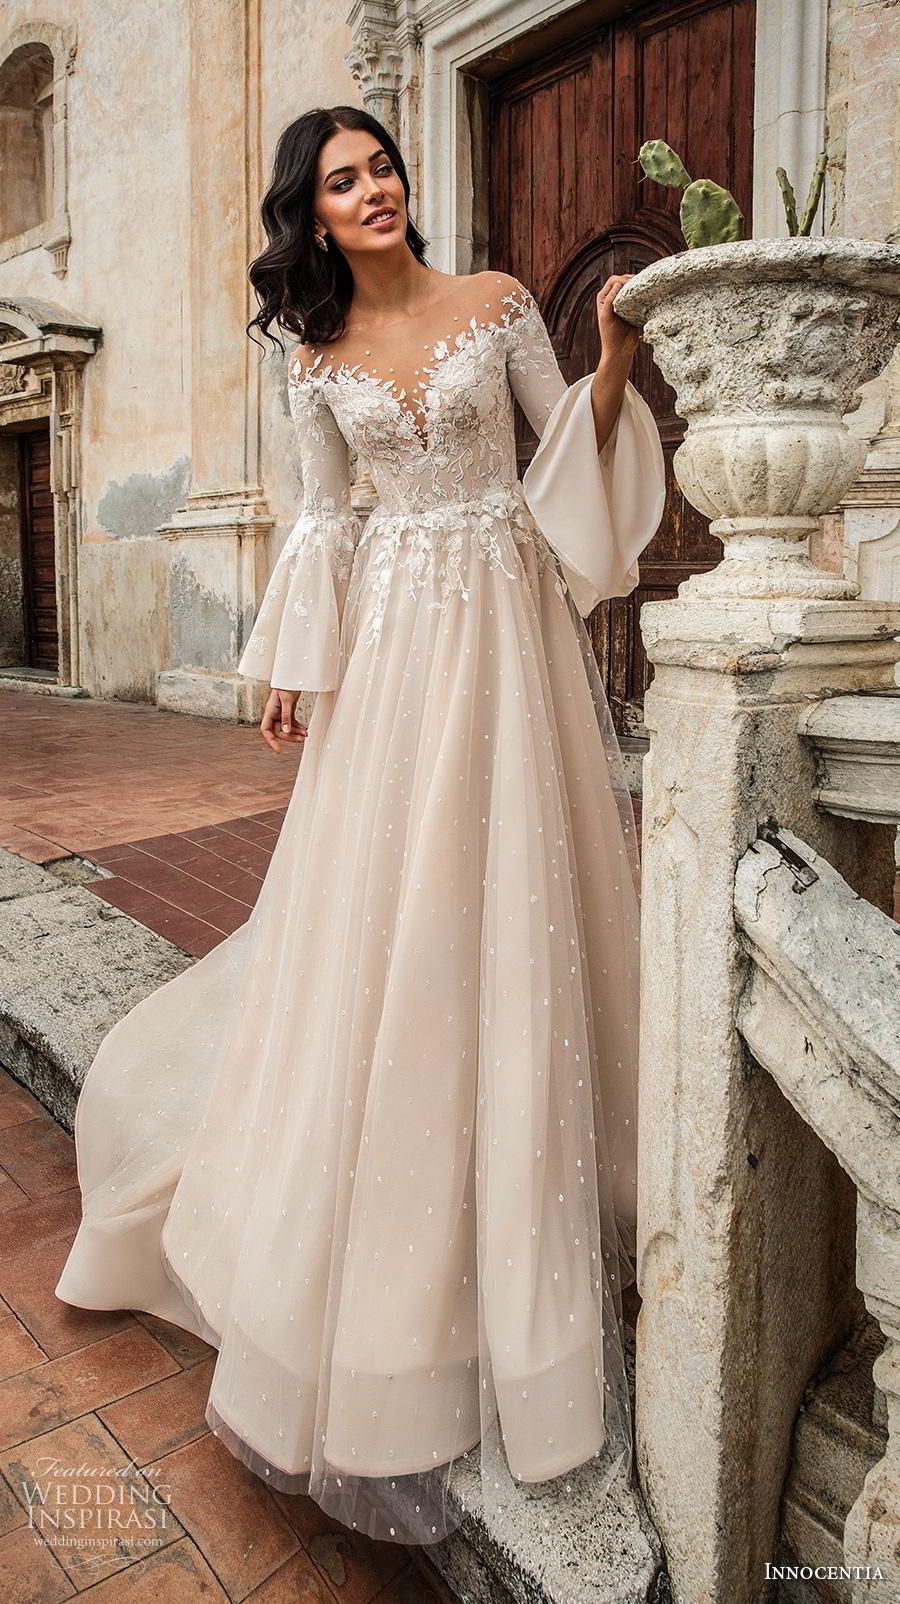 Innocentia 2019 Wedding Dresses — “Taormina” Bridal Collection